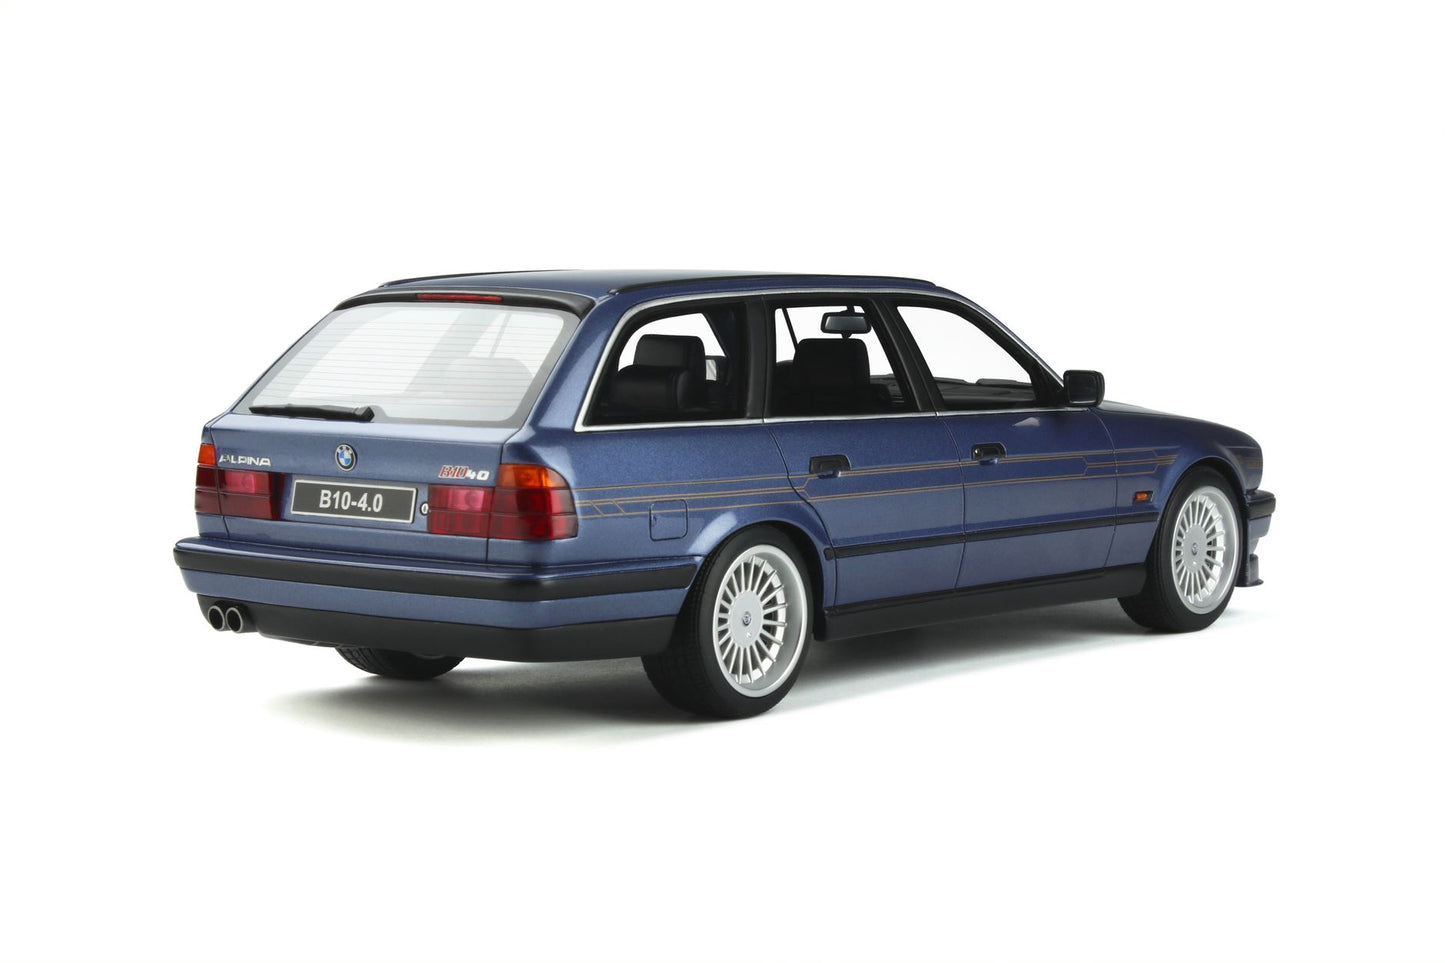 1:18 Alpina B10 4.0 BMW E34 Touring, 1995, blåmetallic, Ottomoible OT944, lukket model, limited